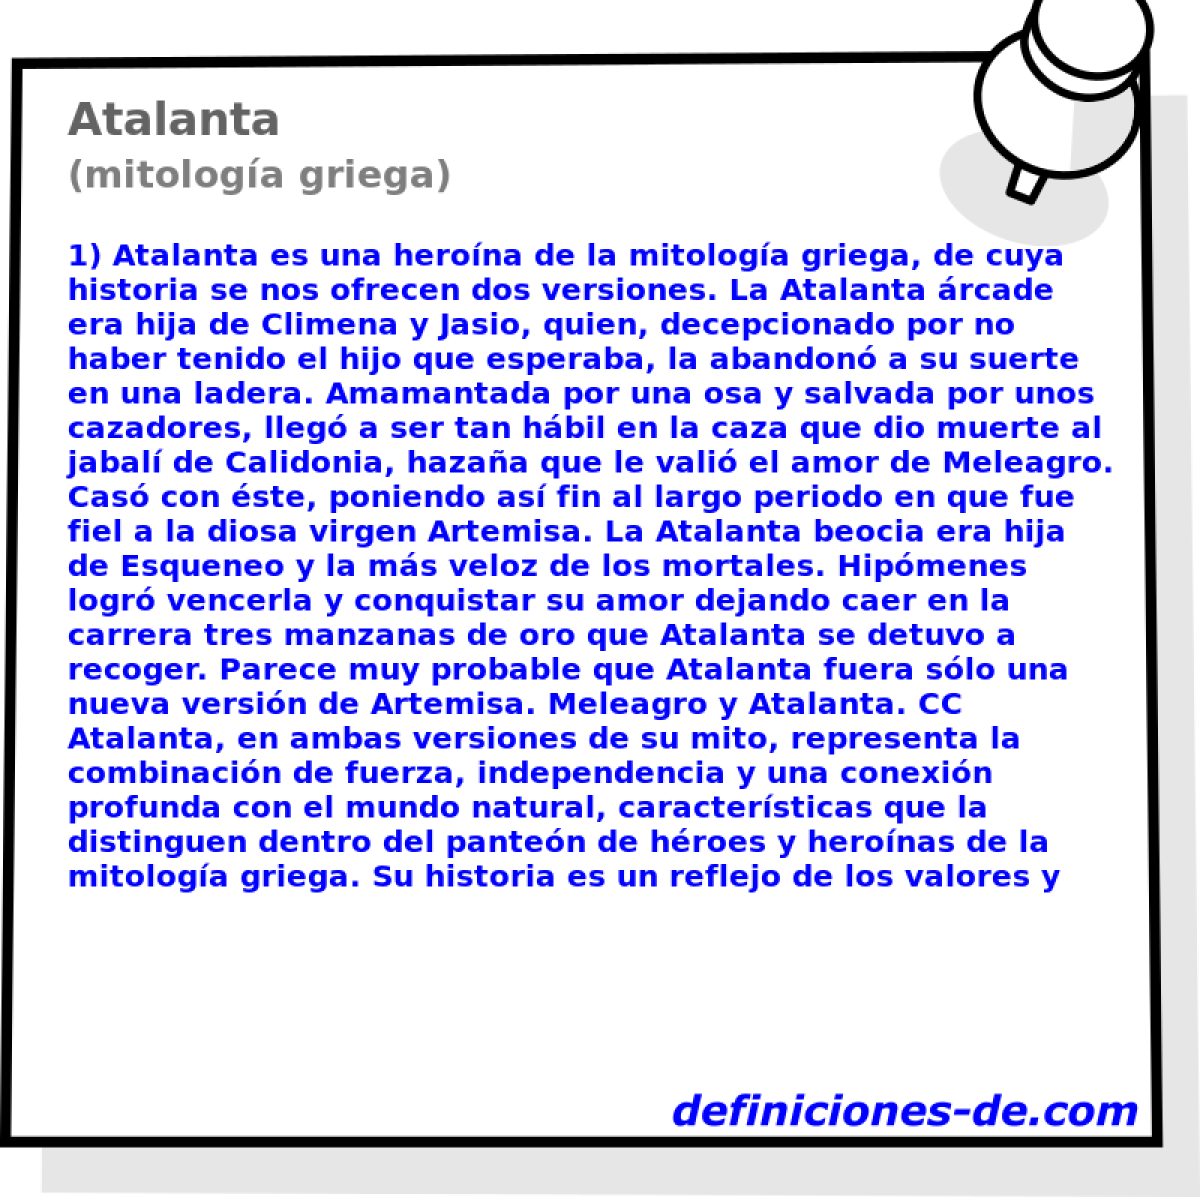 Atalanta (mitologa griega)